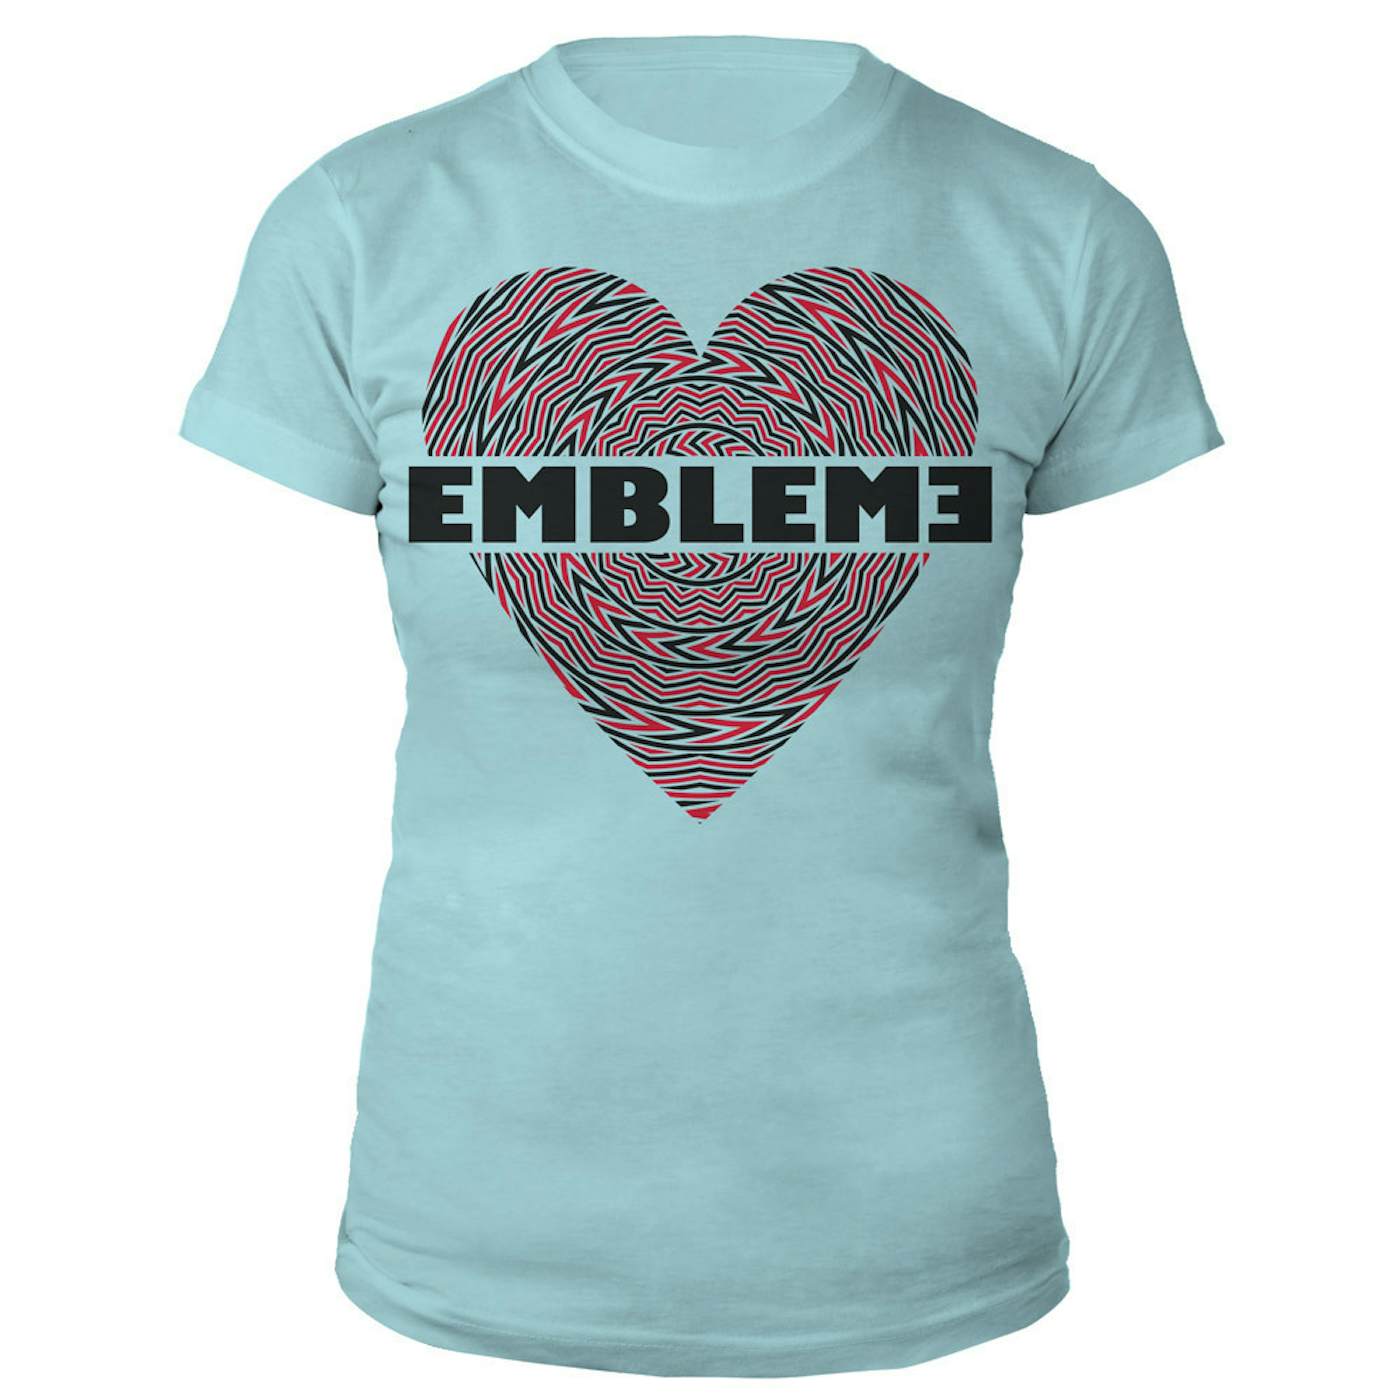 Emblem3 Patterned Heart Girl's Tee